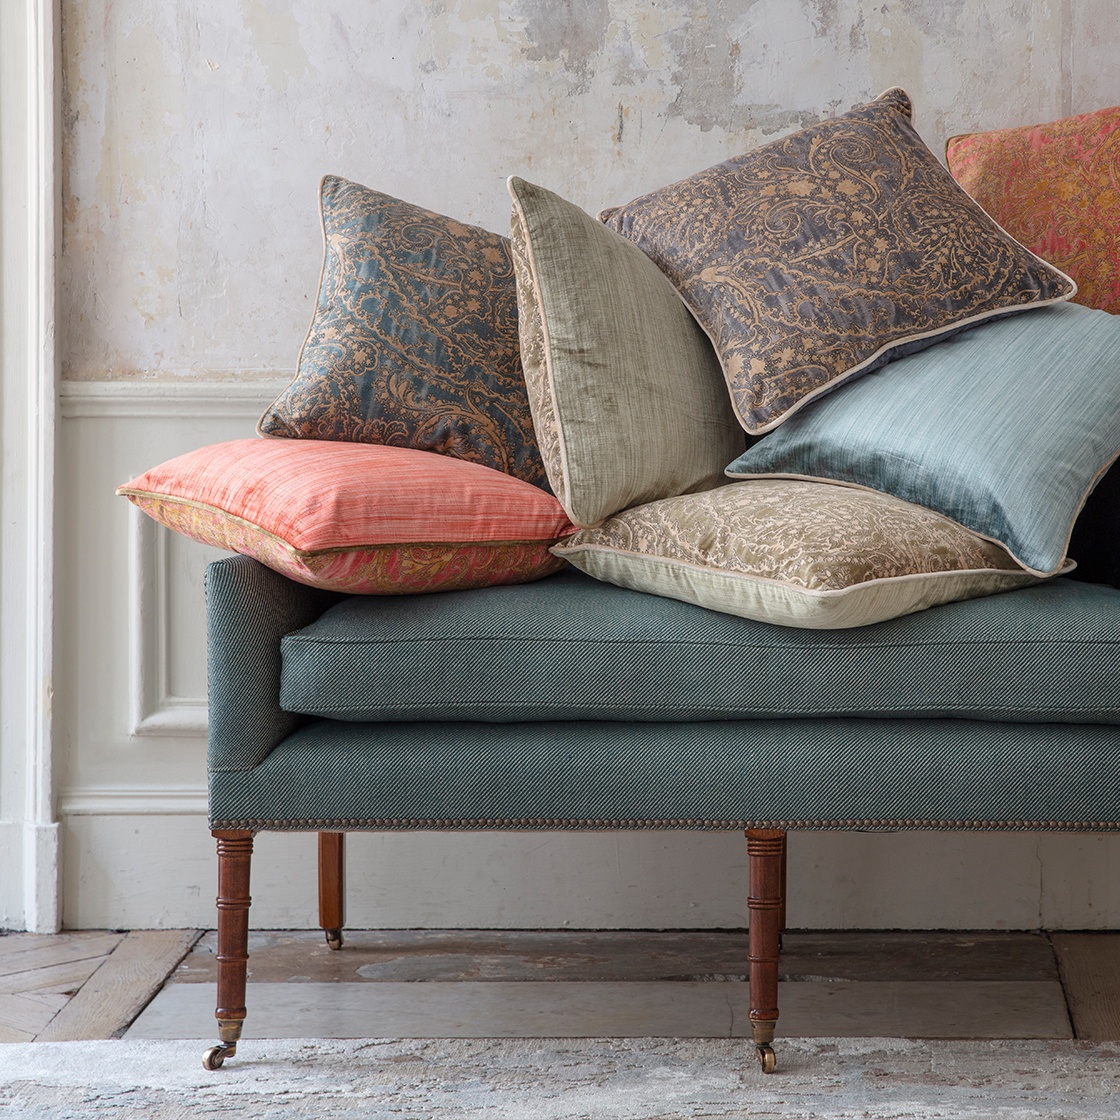 Balthazar cushion collection on Alexandra sofa - Beaumont & Fletcher